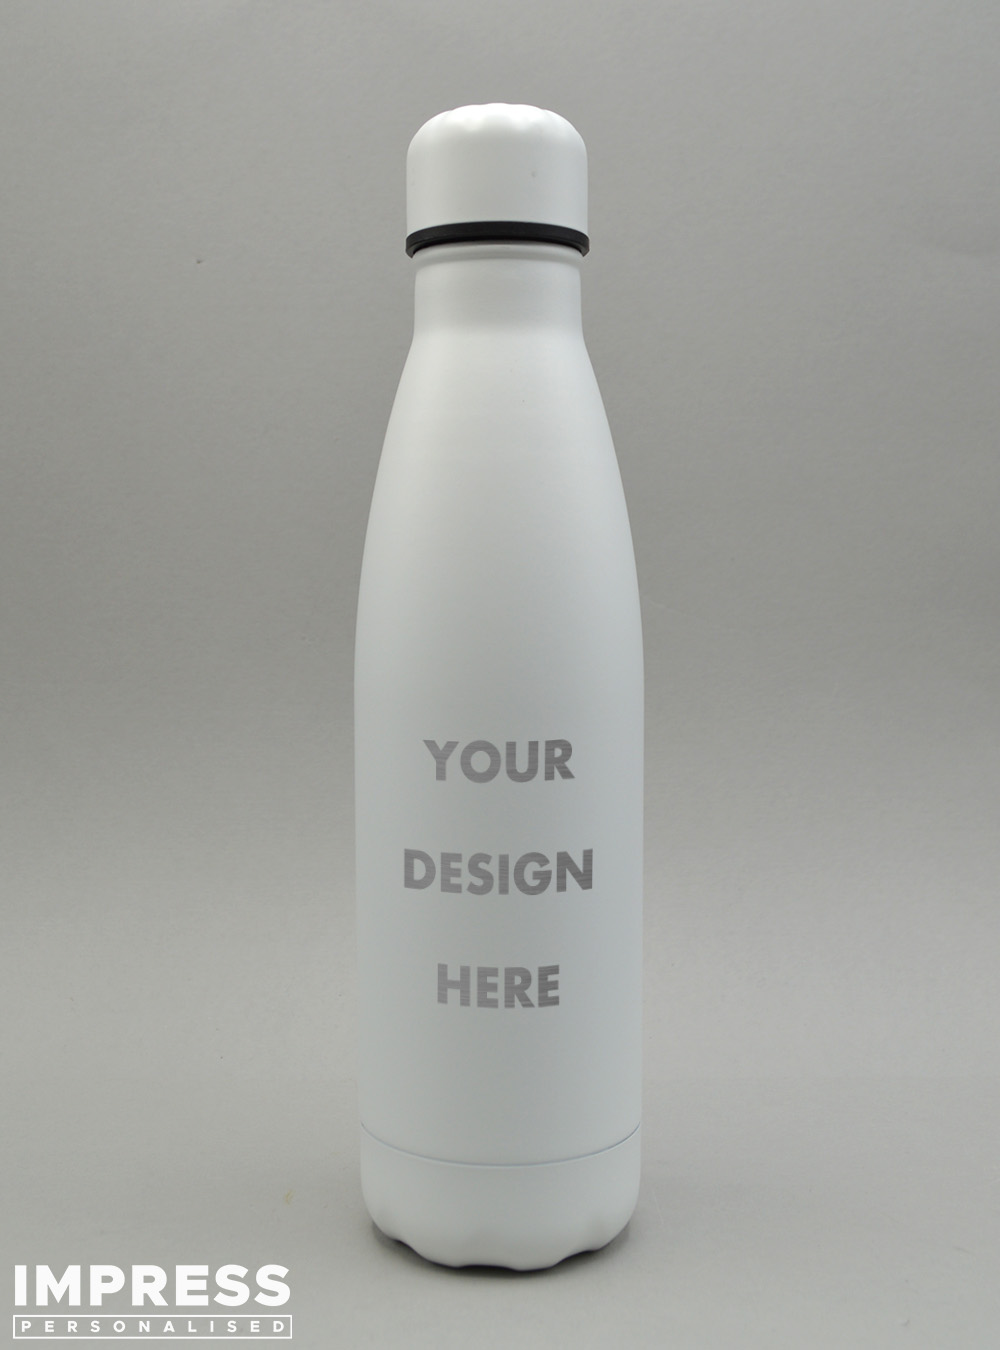 https://impresspersonalised.com/wp-content/uploads/2021/05/thermos-bottle-design-your-own-7.jpg